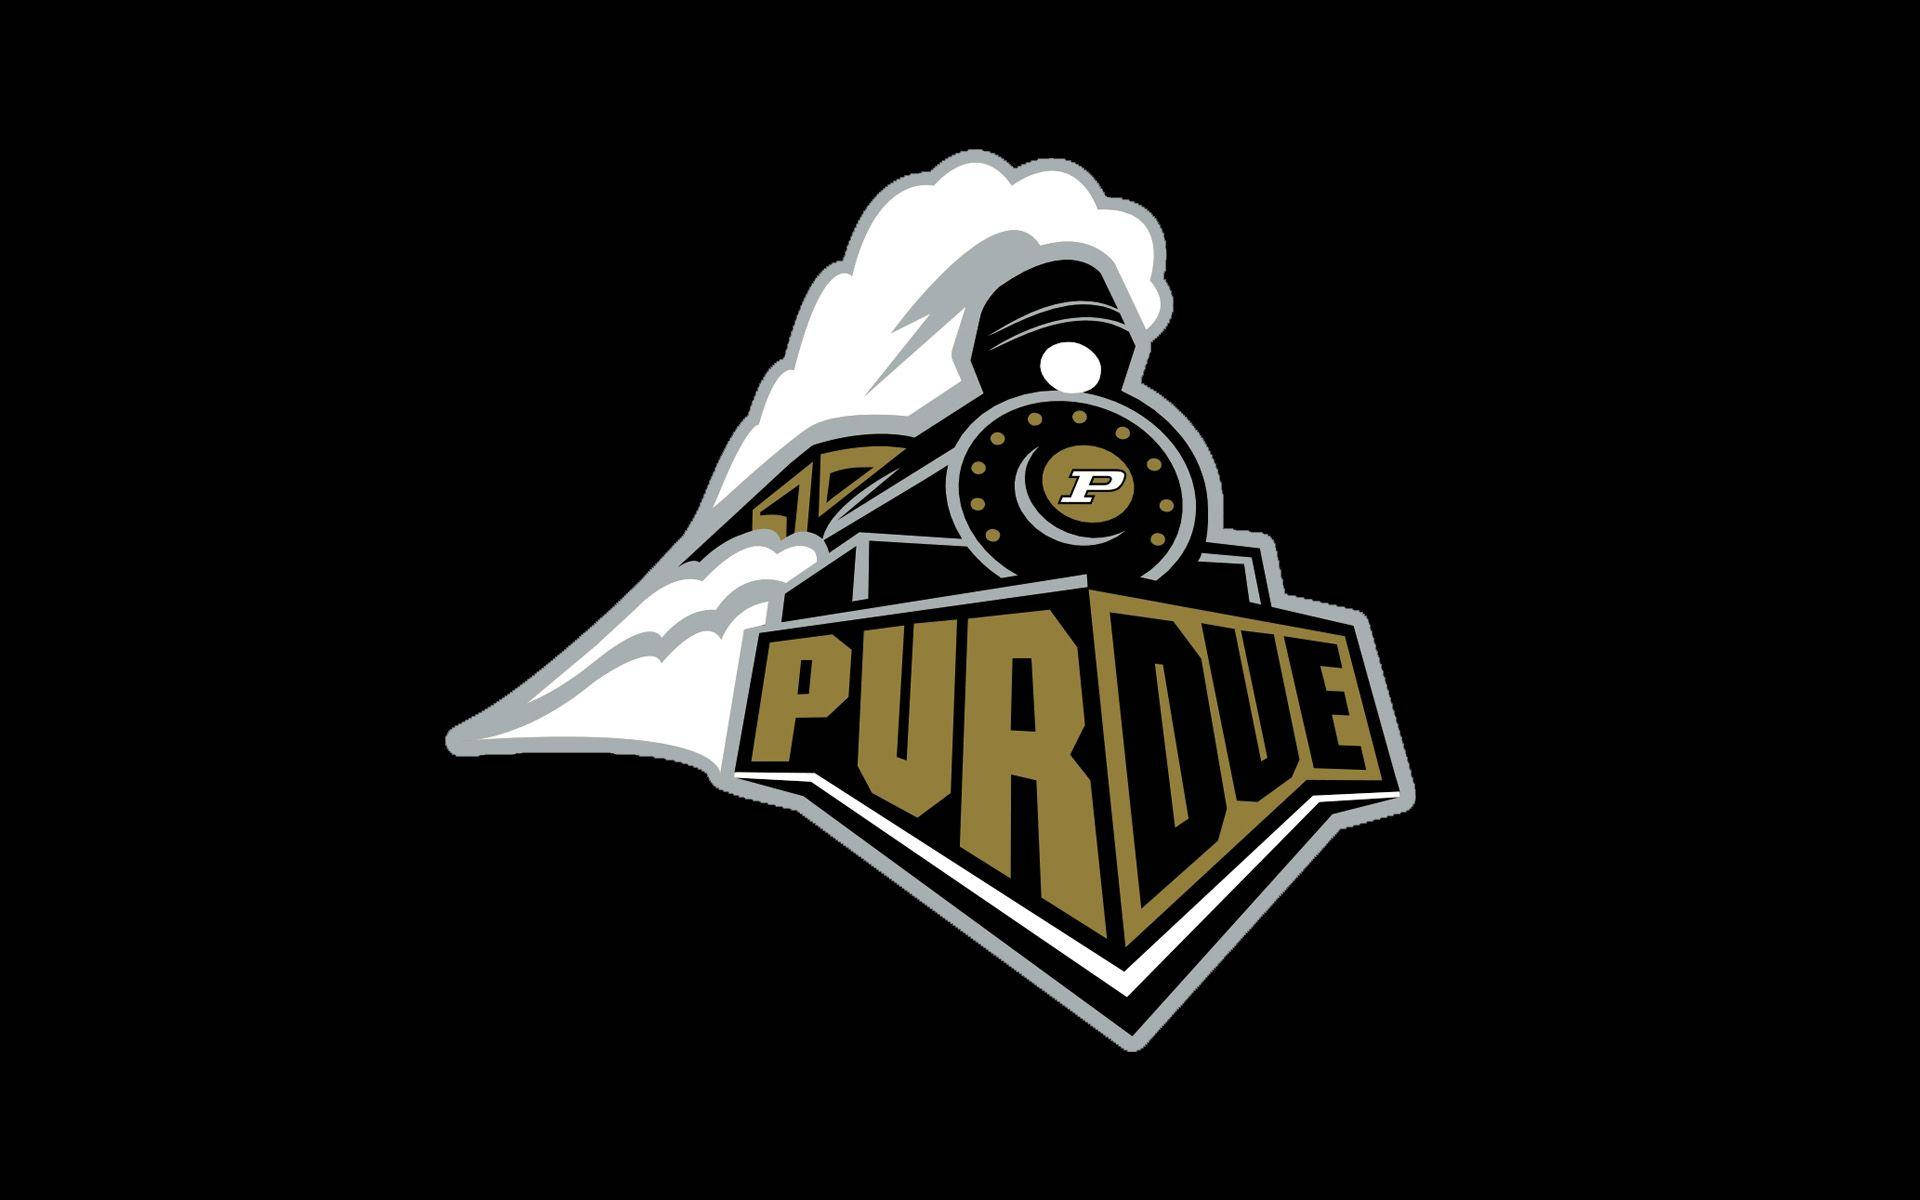 Purdue University Mascot In Black Wallpaper